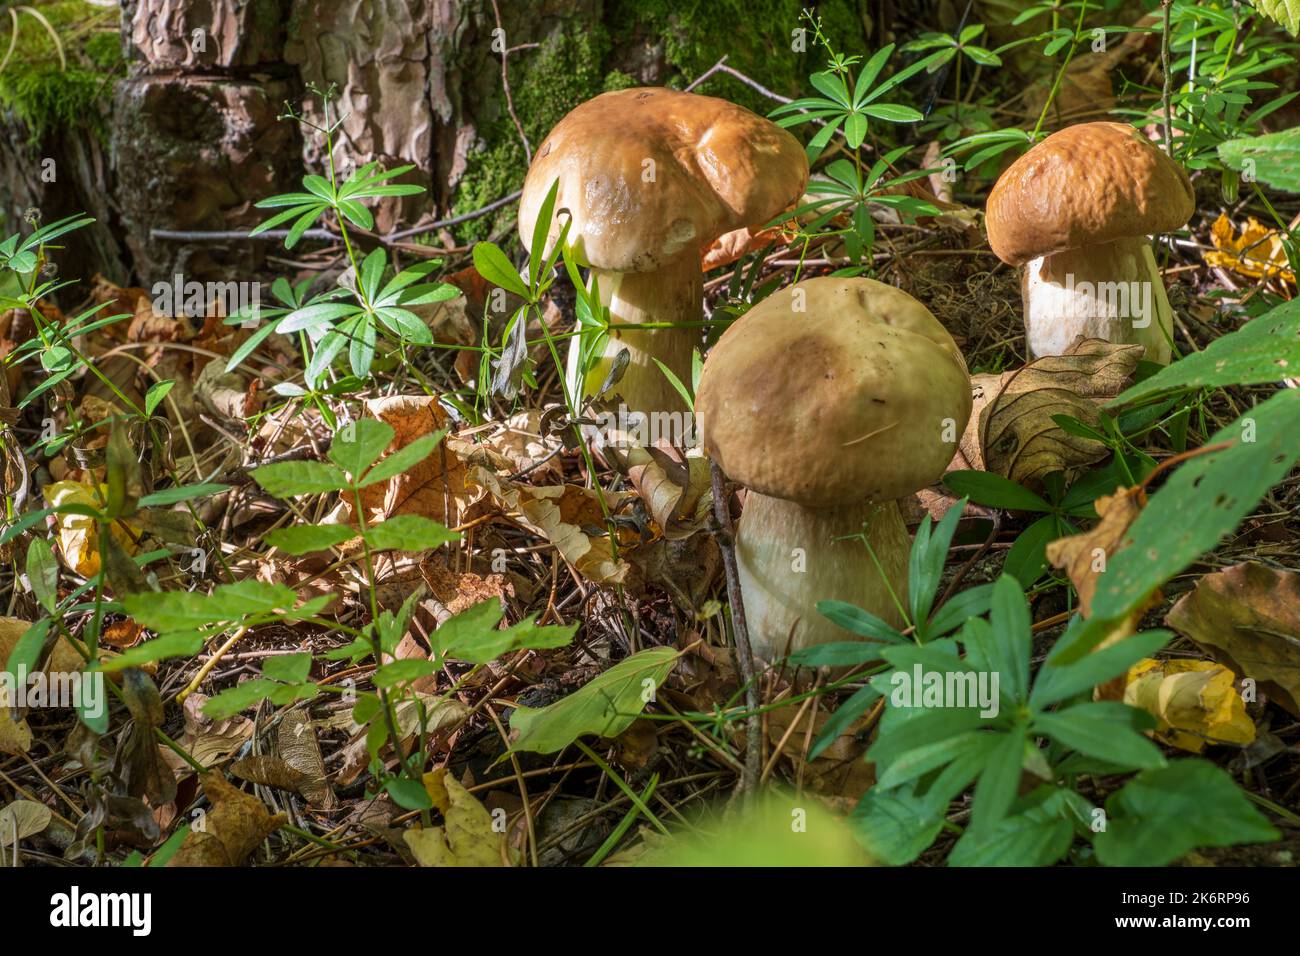 three yellow boletus mushrooms in the forest Stock Photo